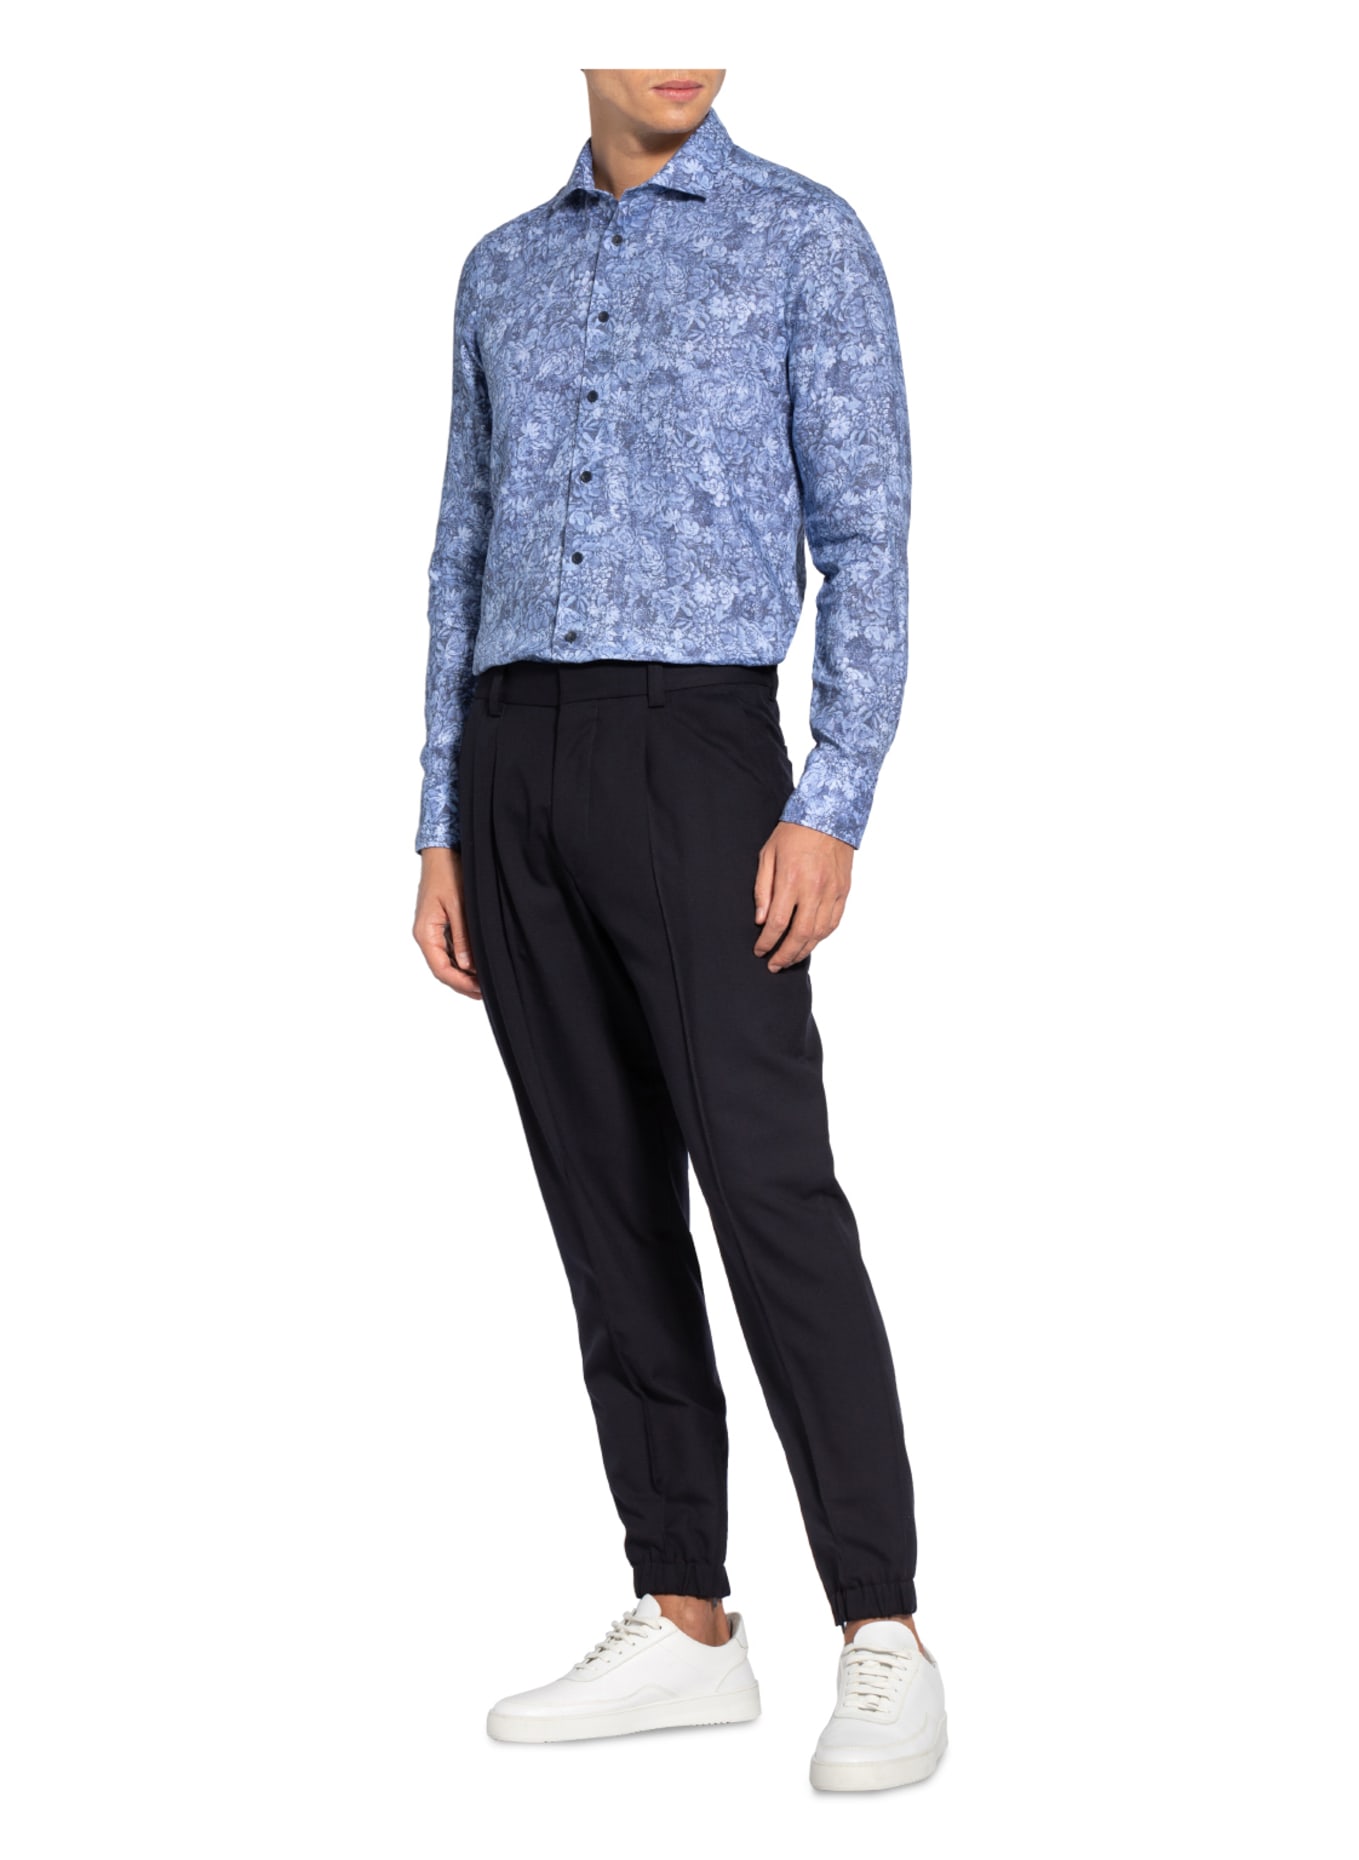 OLYMP SIGNATURE Leinenhemd tailored fit, Farbe: DUNKELGRAU/ HELLBLAU/ WEISS (Bild 2)